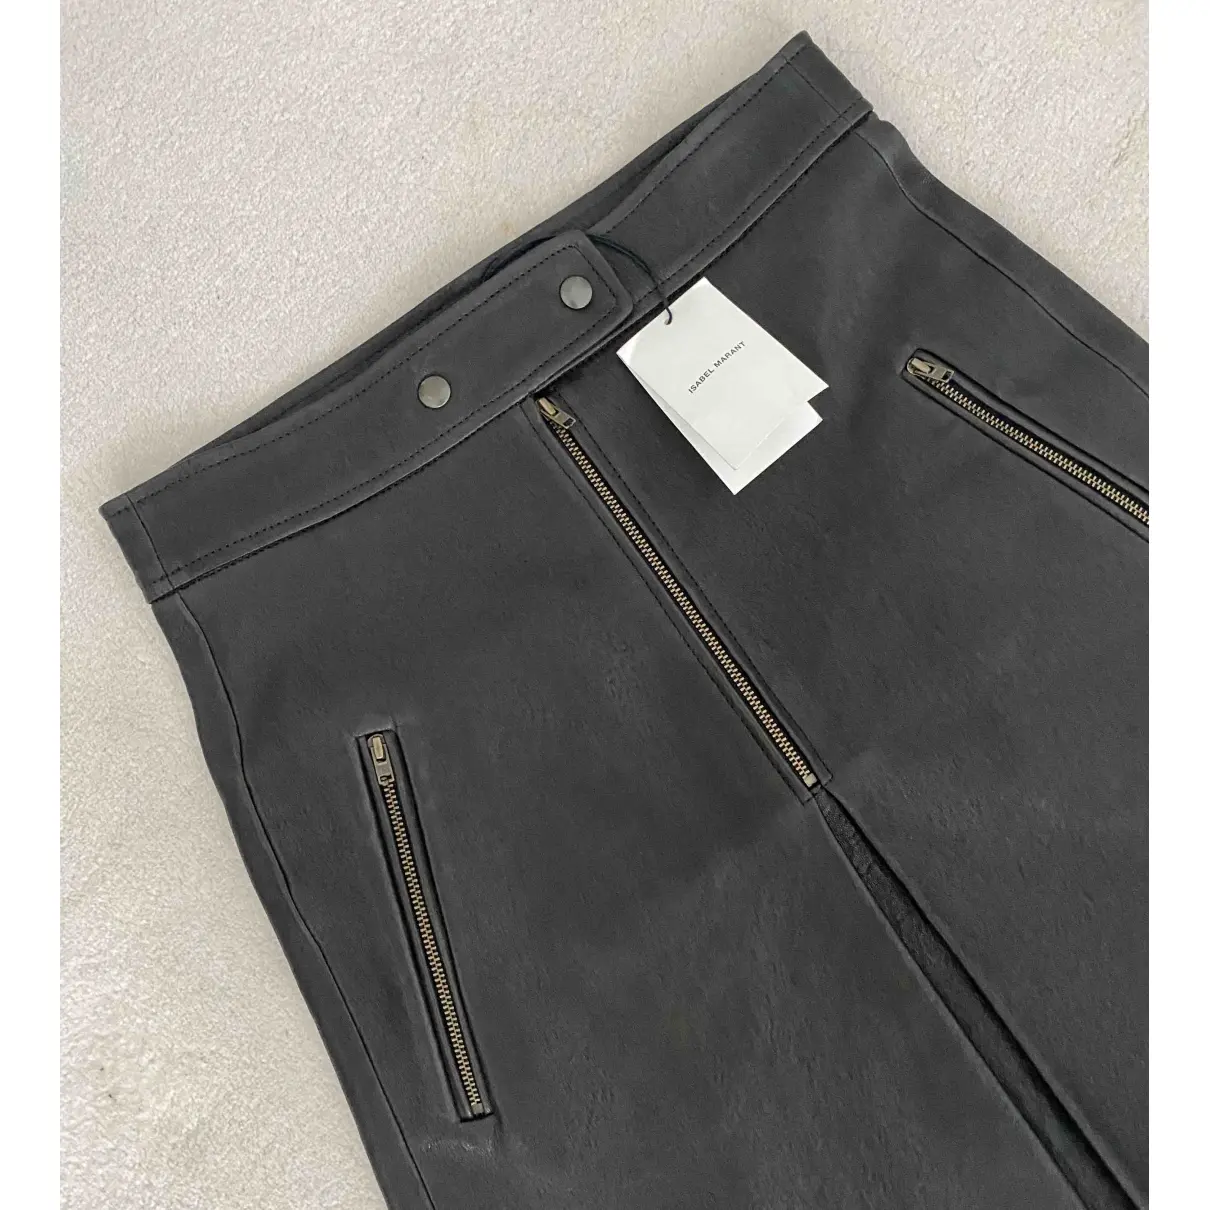 Leather mid-length skirt Isabel Marant